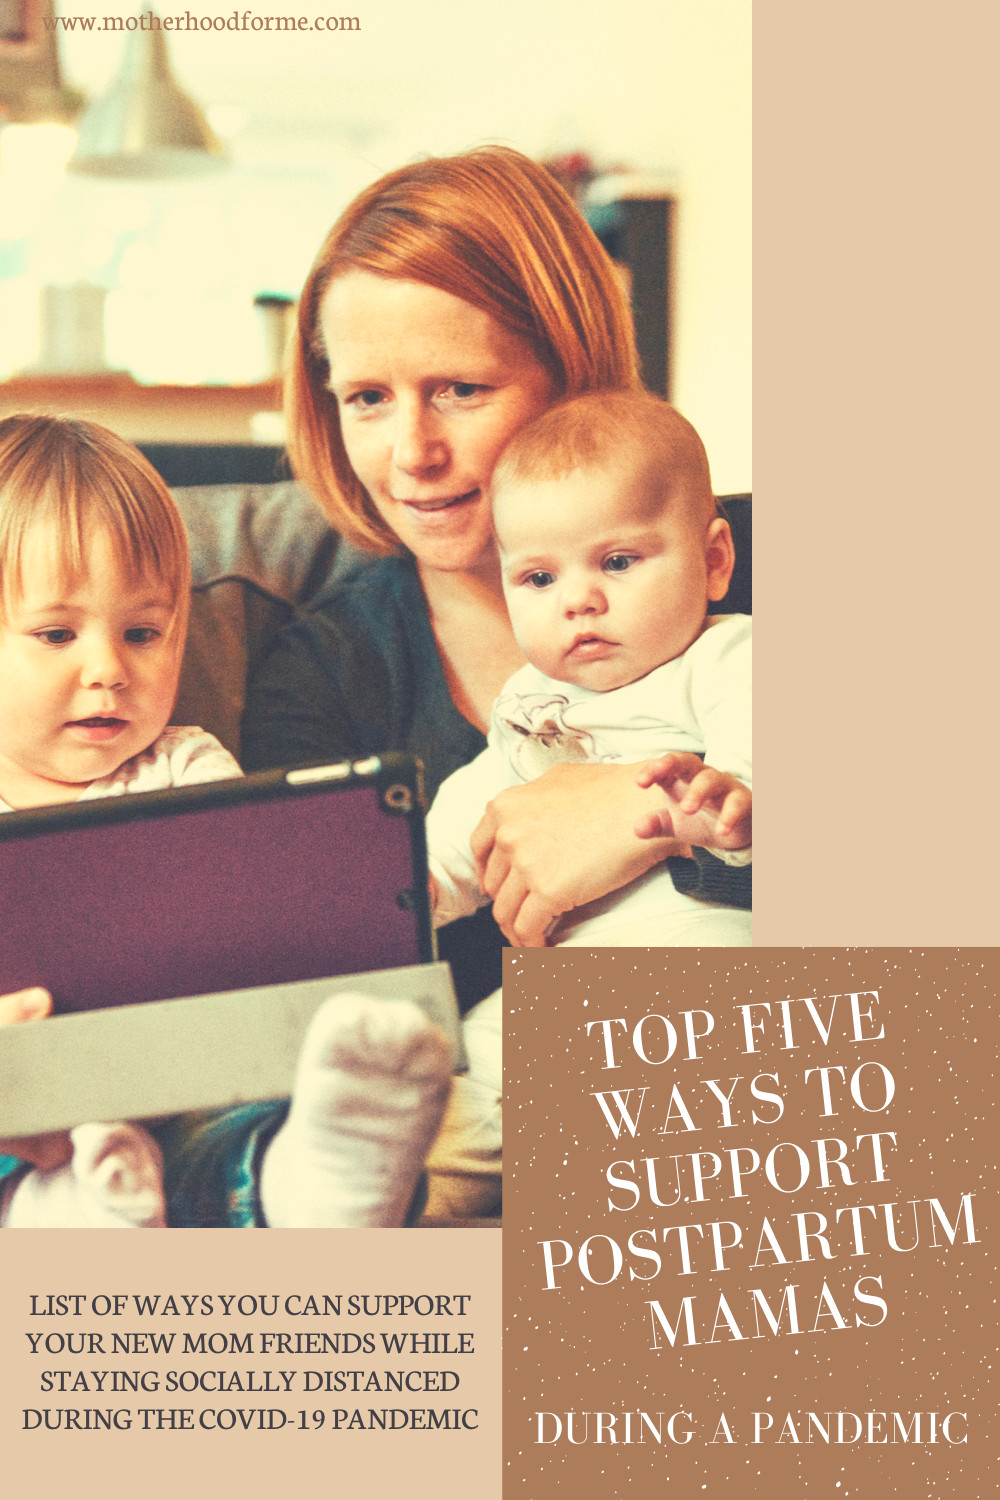 5 ways to support postpartum mamas